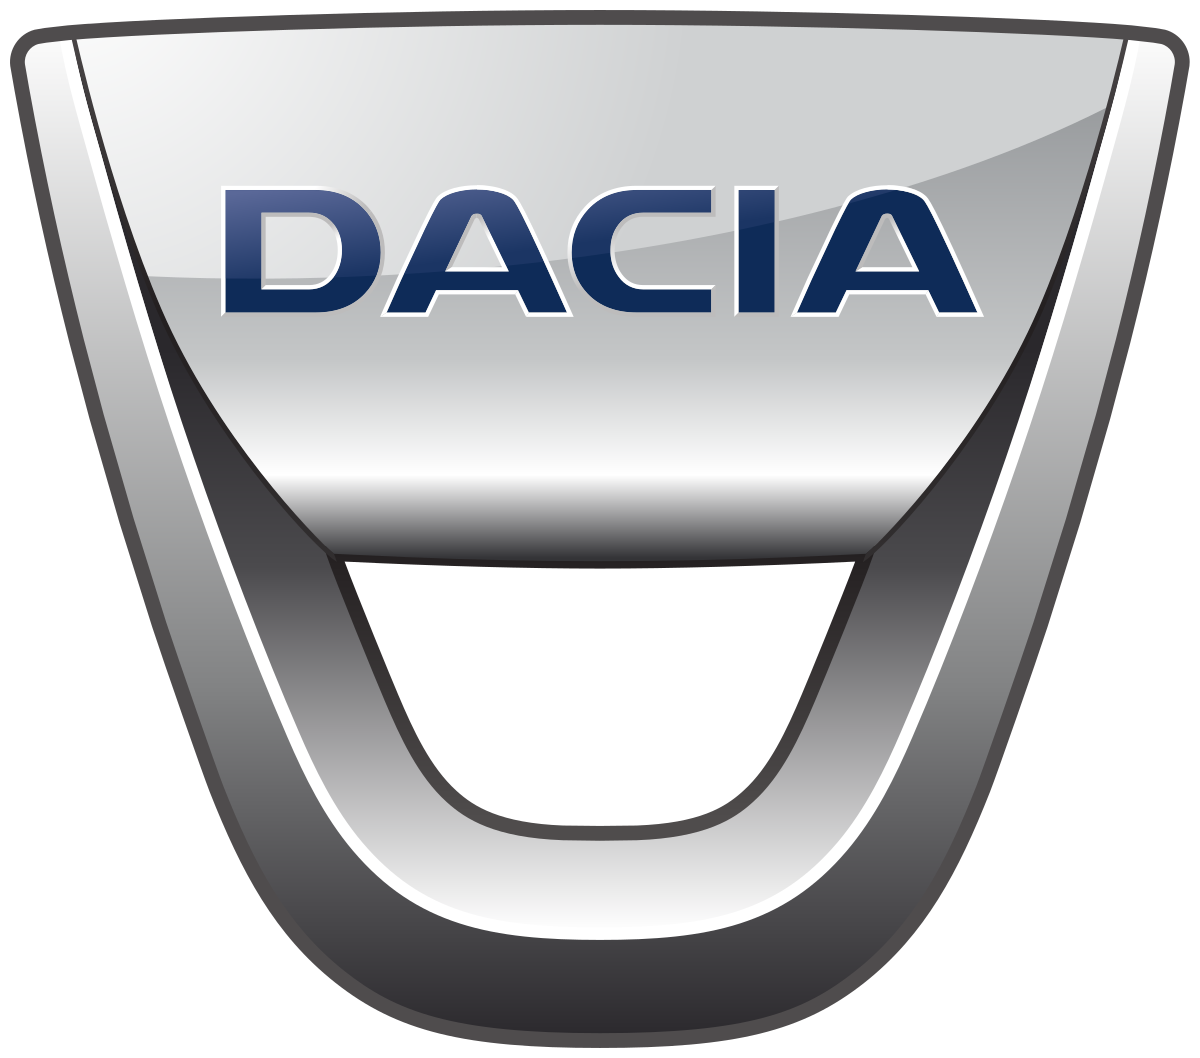 Codice autoradio Dacia